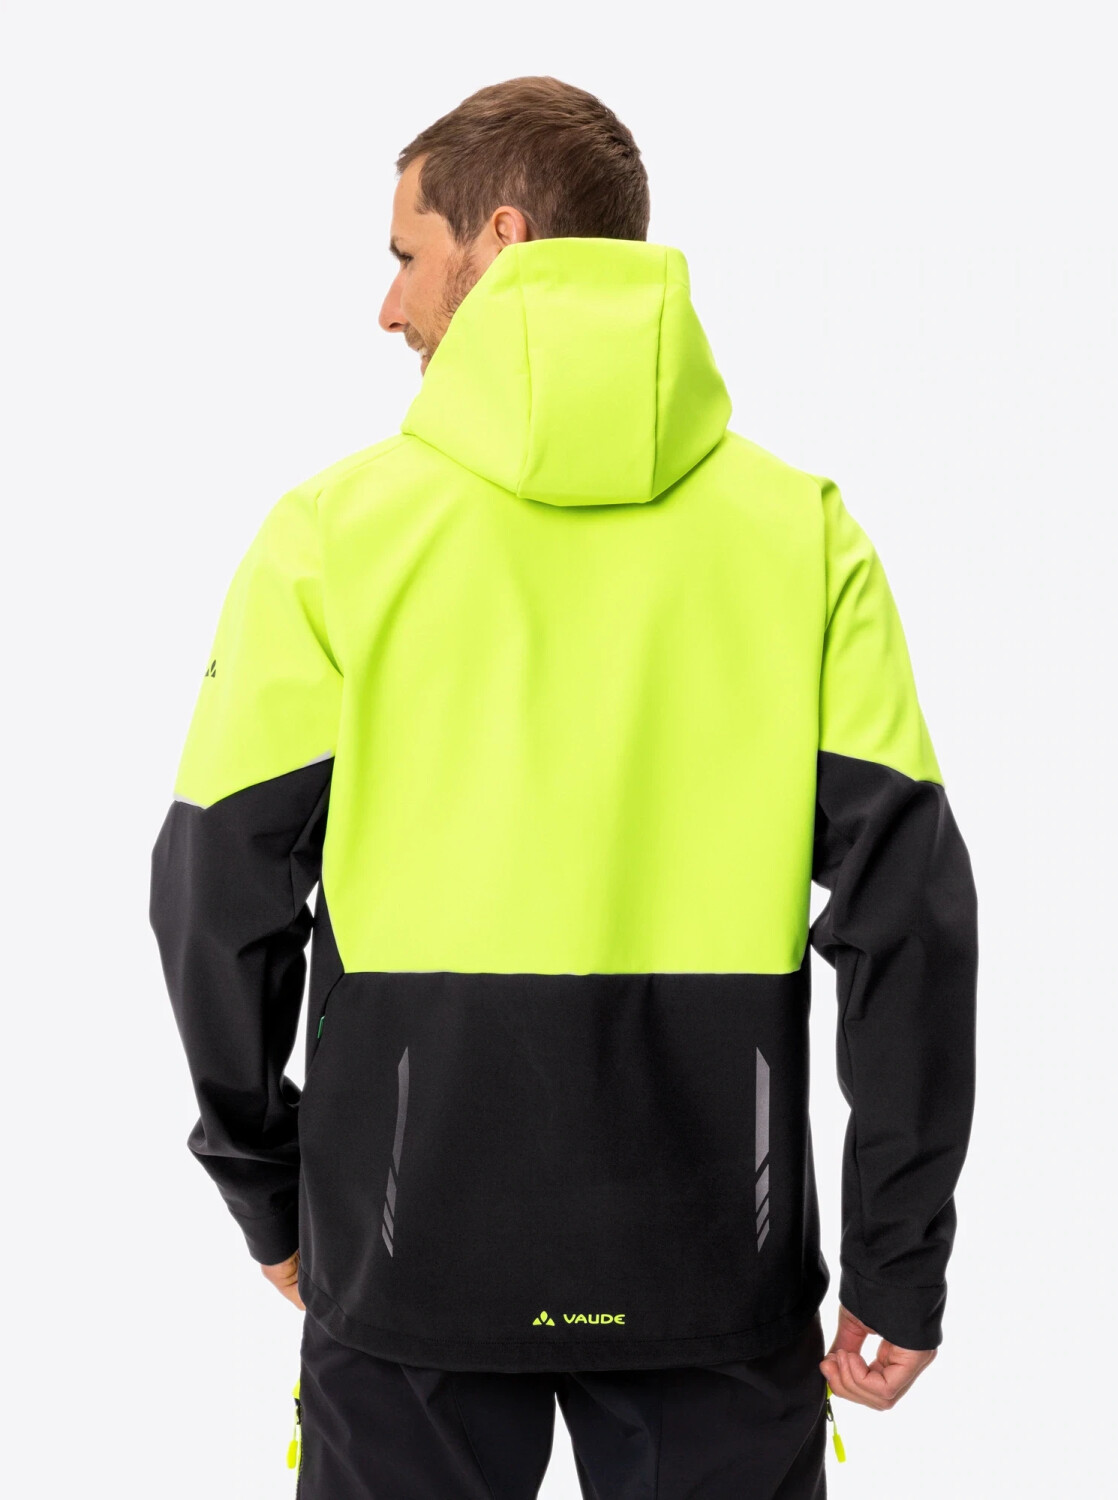 € Qimsa Preisvergleich 89,95 yellow VAUDE Jacket bei Men\'s Softshell ab neon |